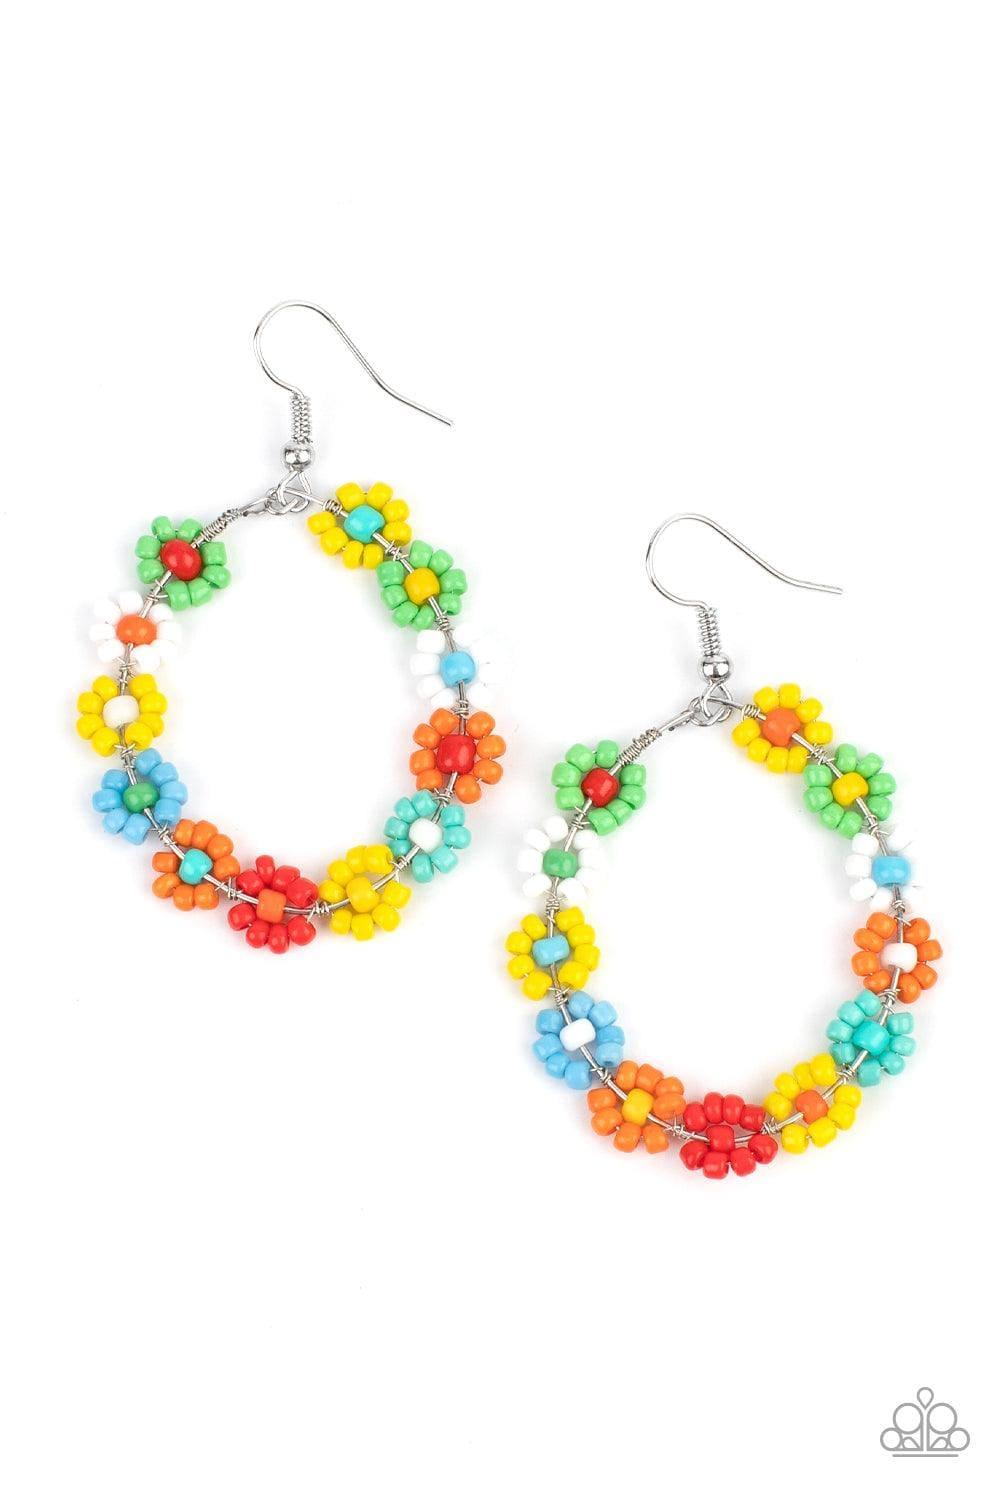 Paparazzi Accessories - Festively Flower Child - Multicolor Earrings - Bling by JessieK